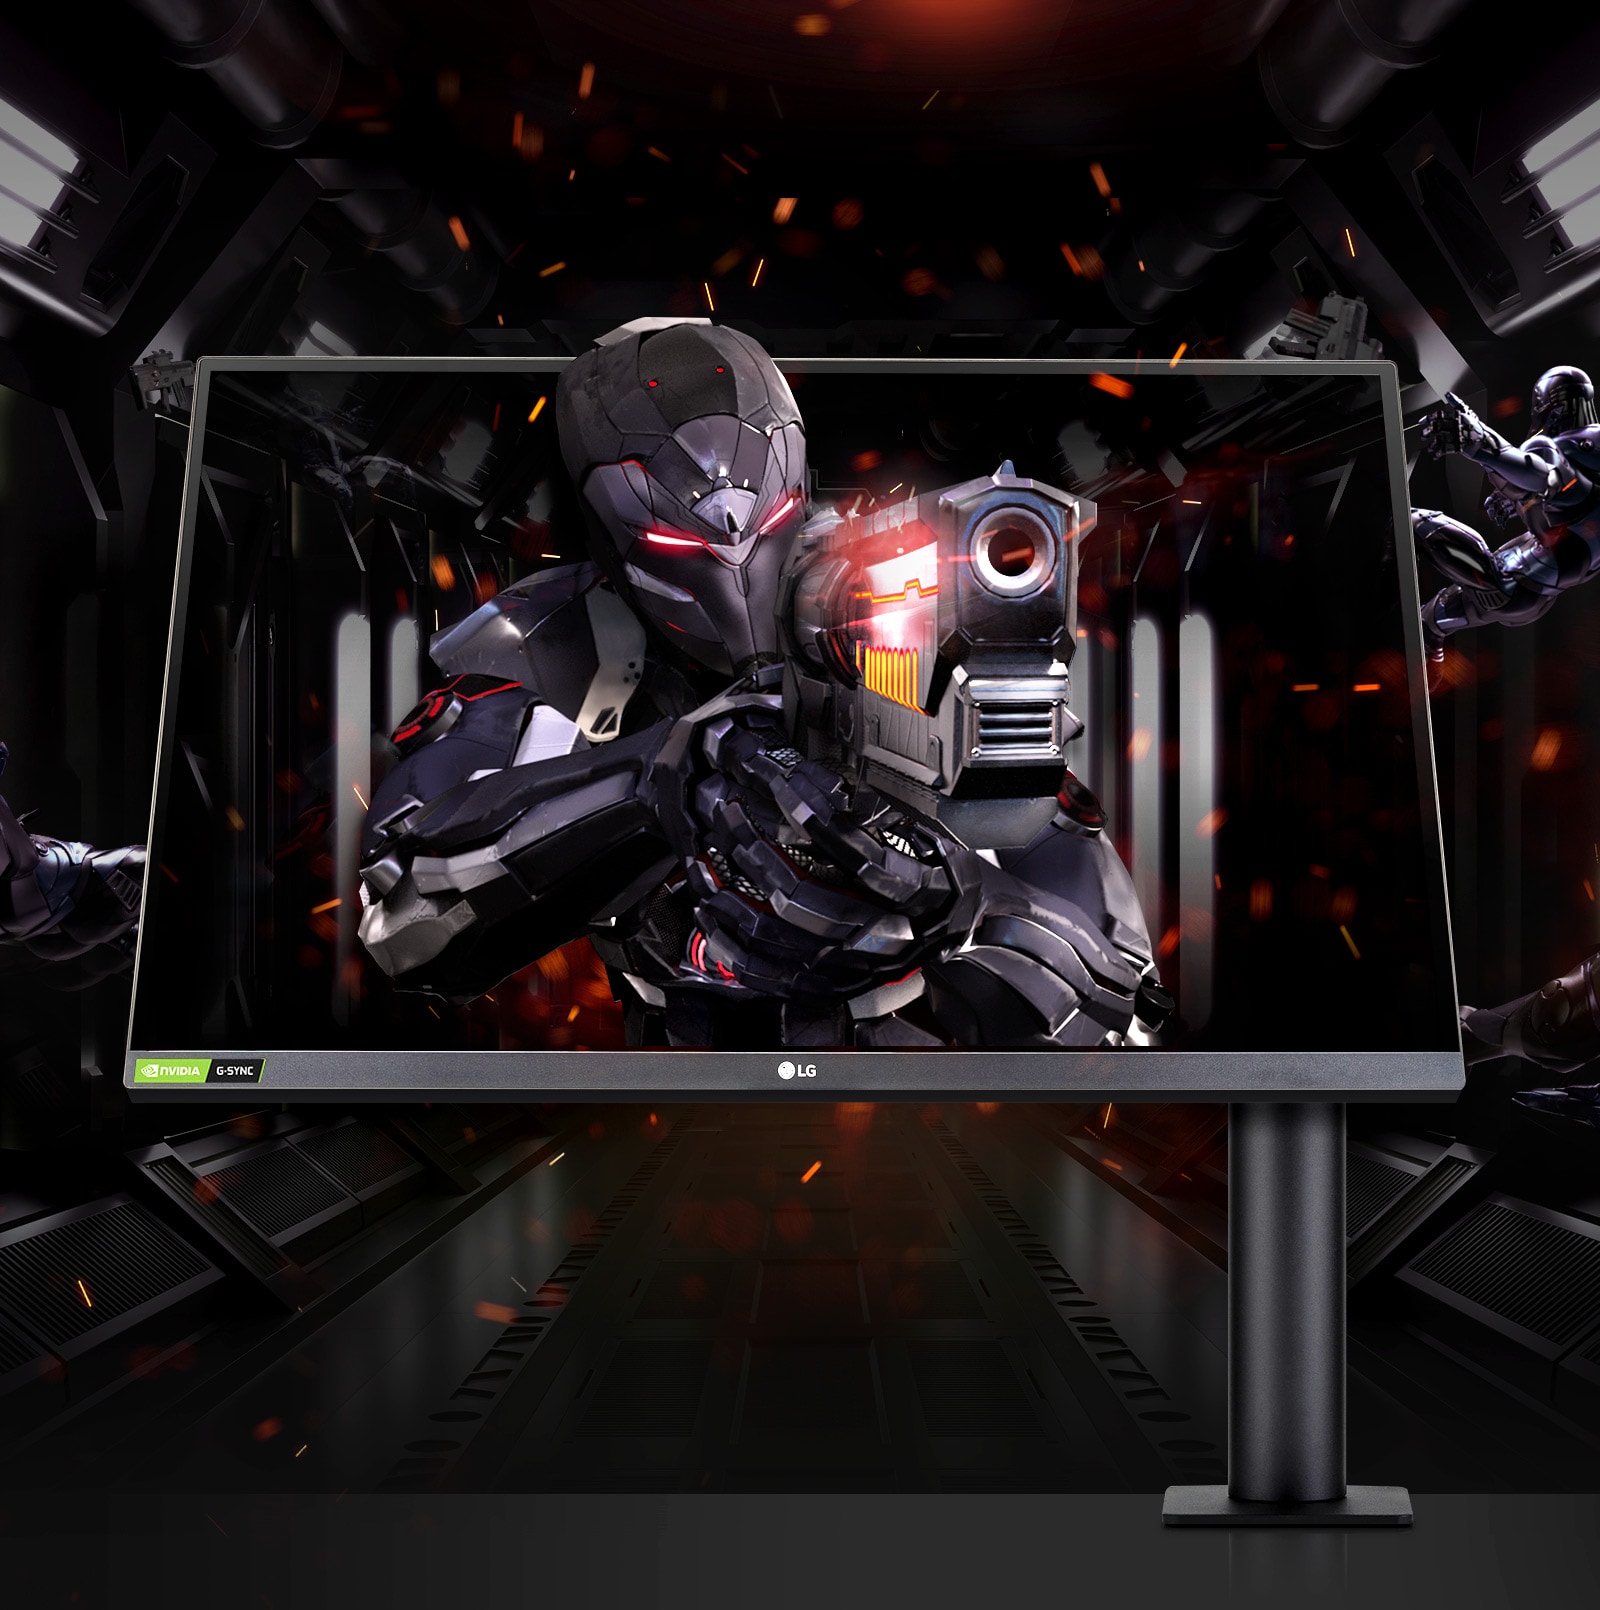 LG UltraGear monitor as the powerful gaming display